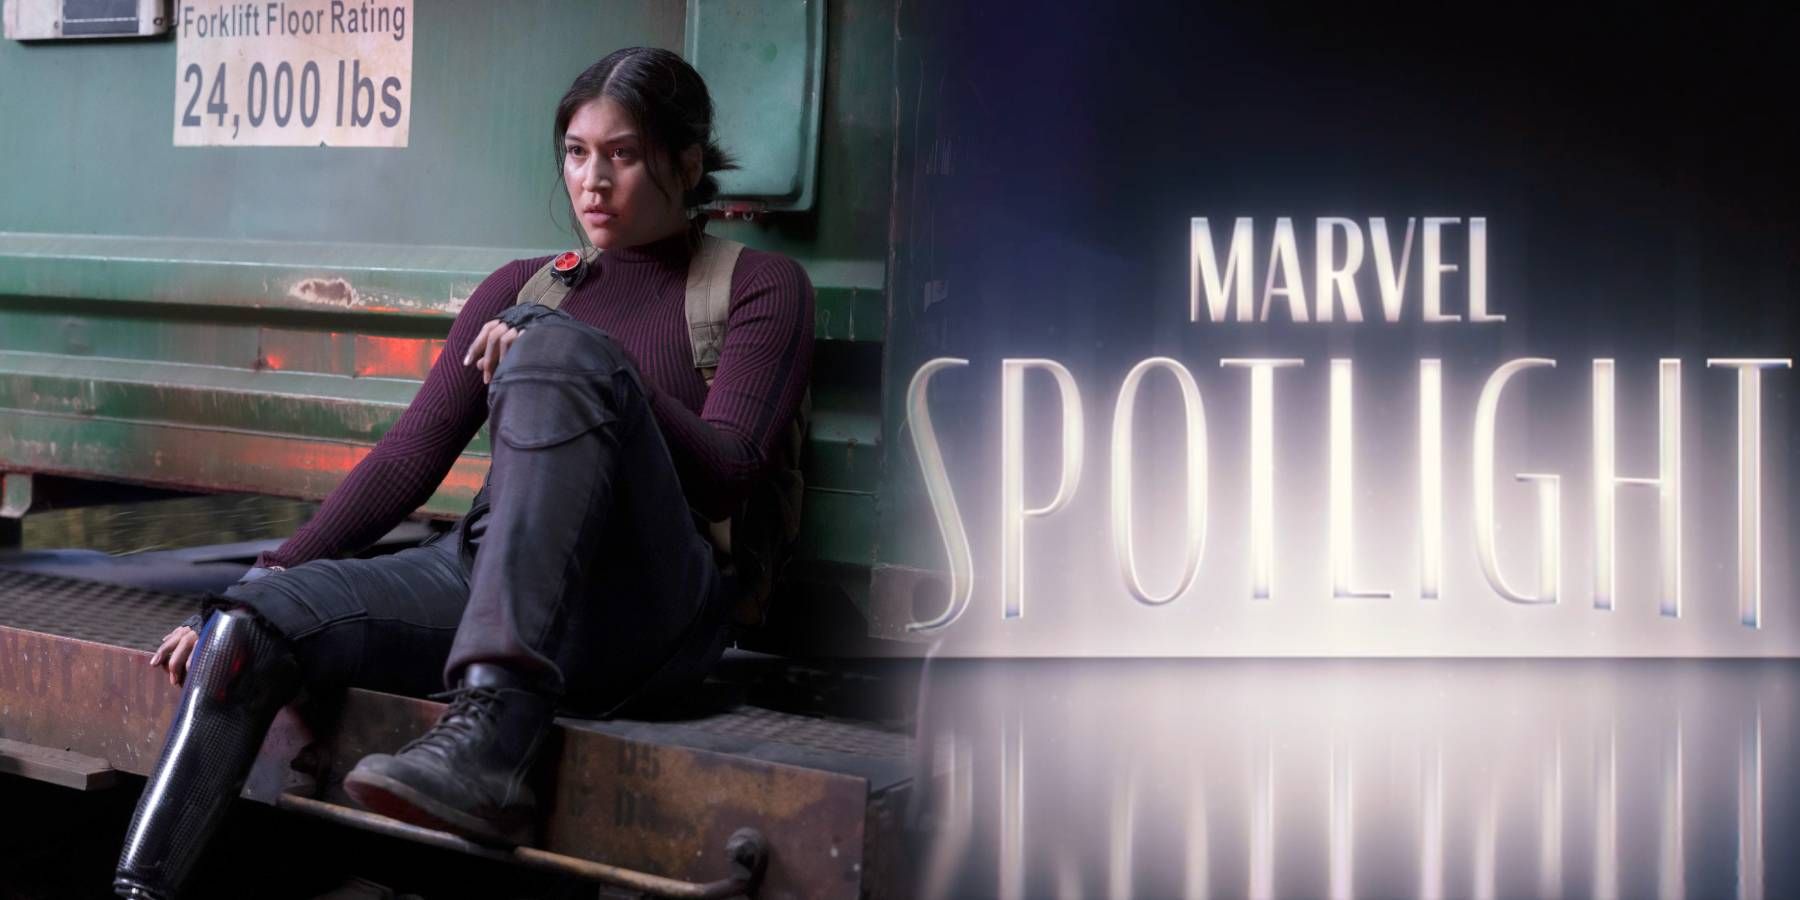 Alaqua Cox as Maya Lopez from Marvel's Echo with the Marvel Spotlight logo